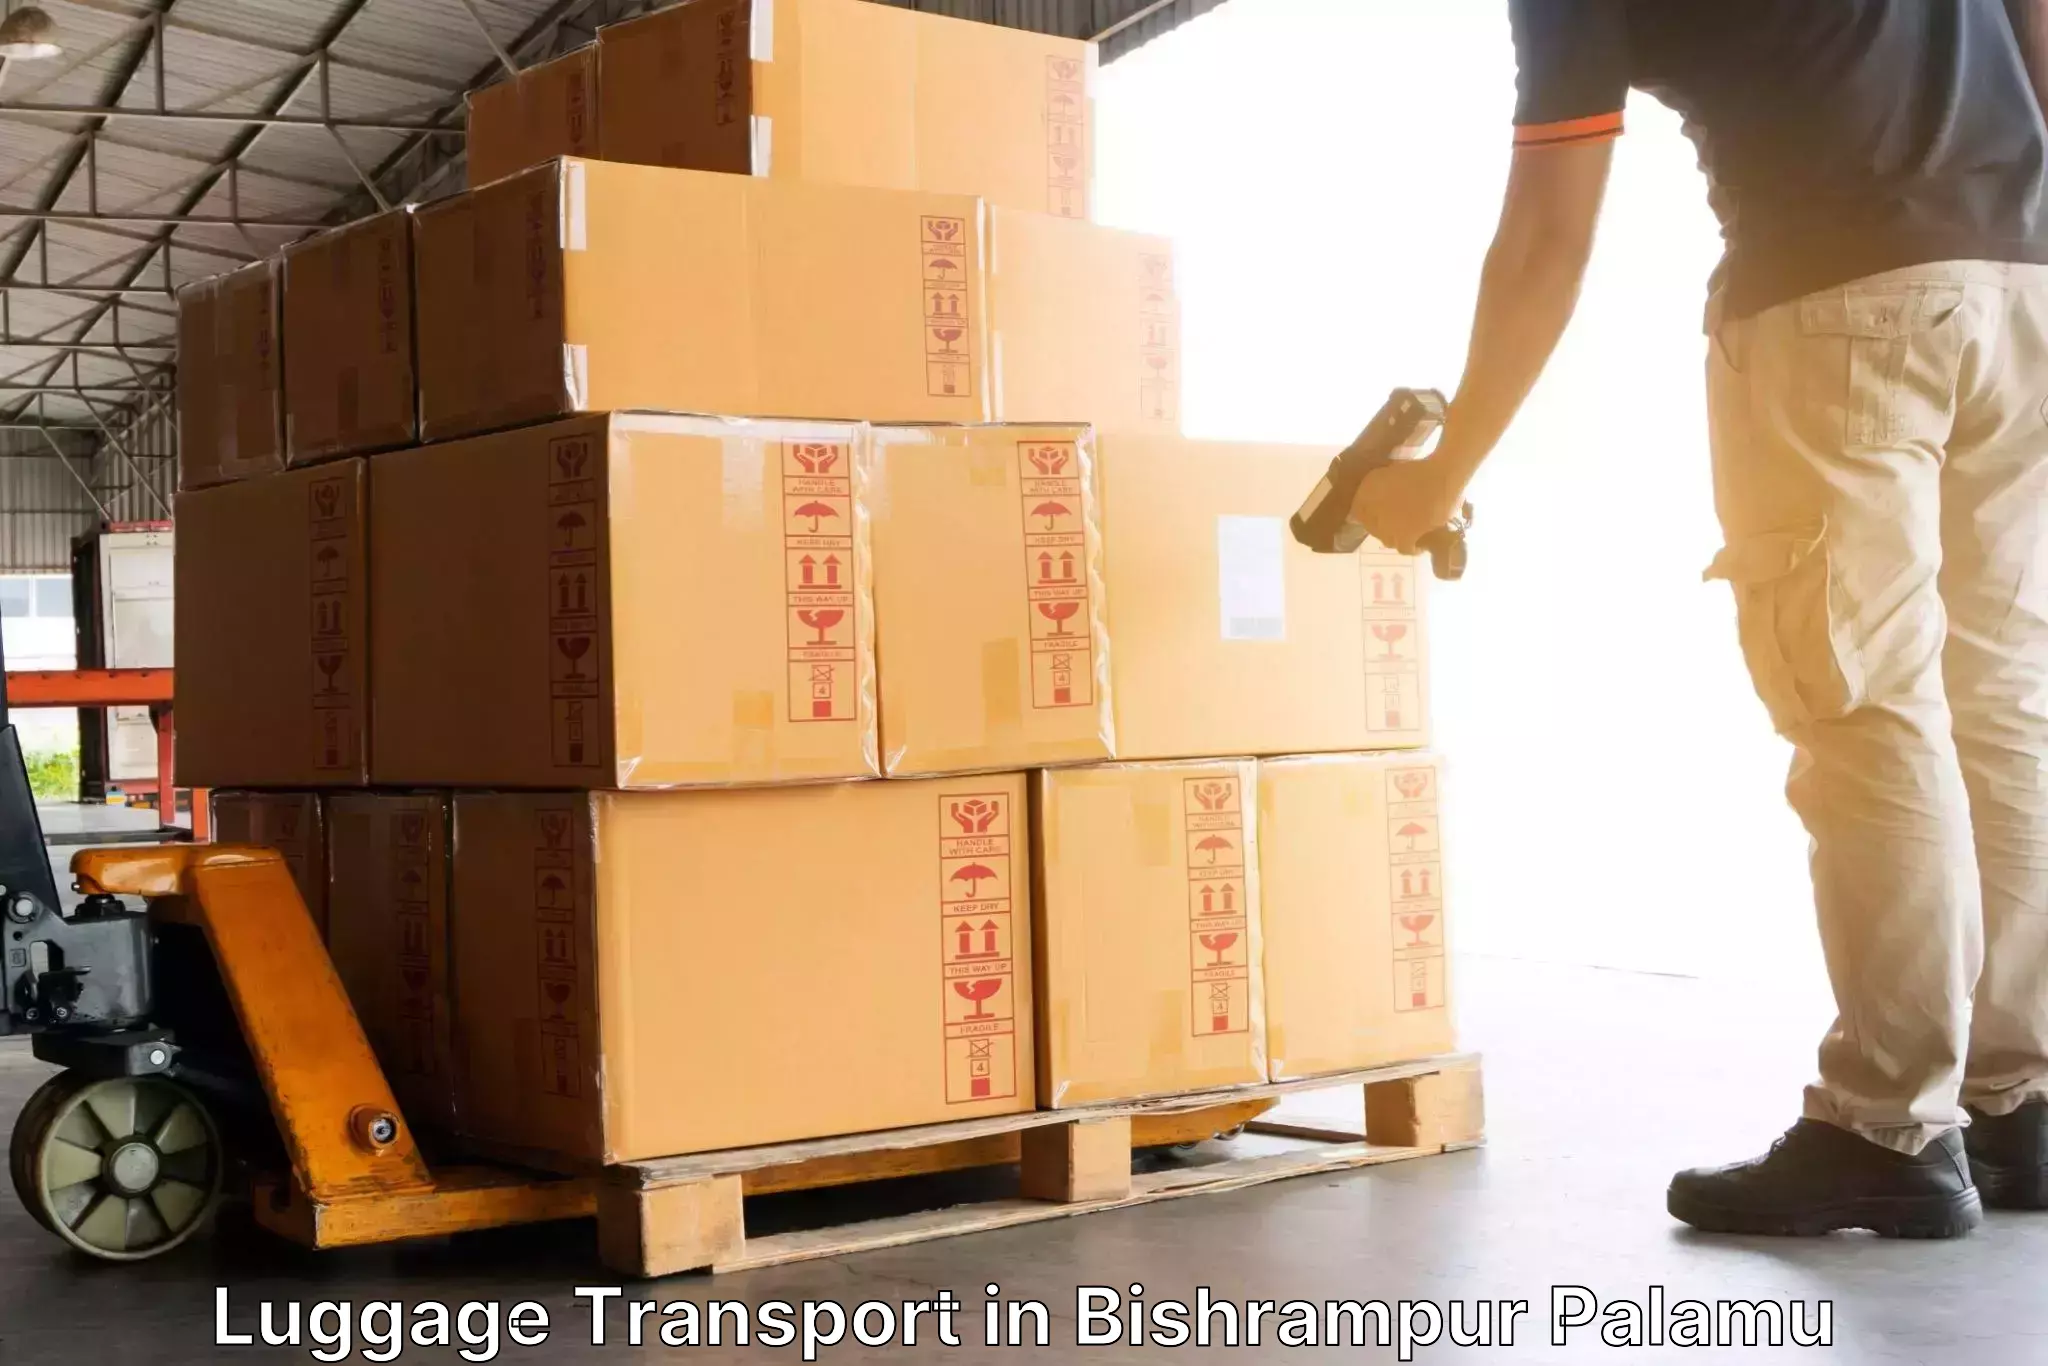 Baggage transport network in Bishrampur Palamu